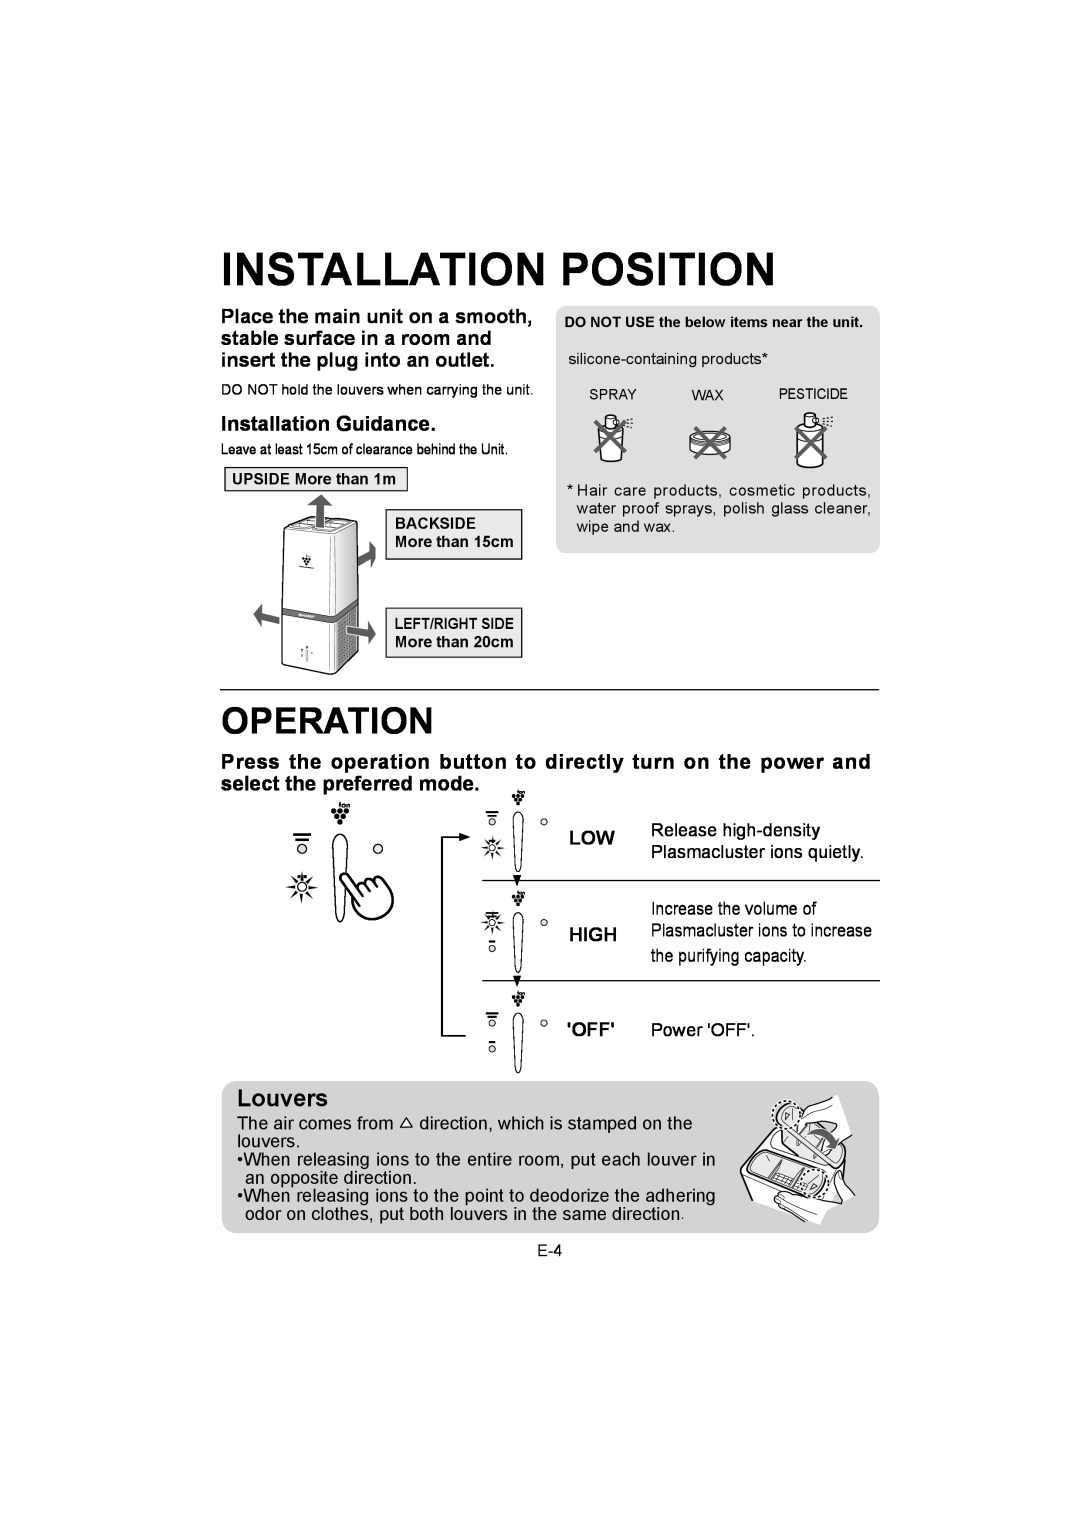 Sharp IG-A10E operation manual Installation Position, Operation, Louvers 